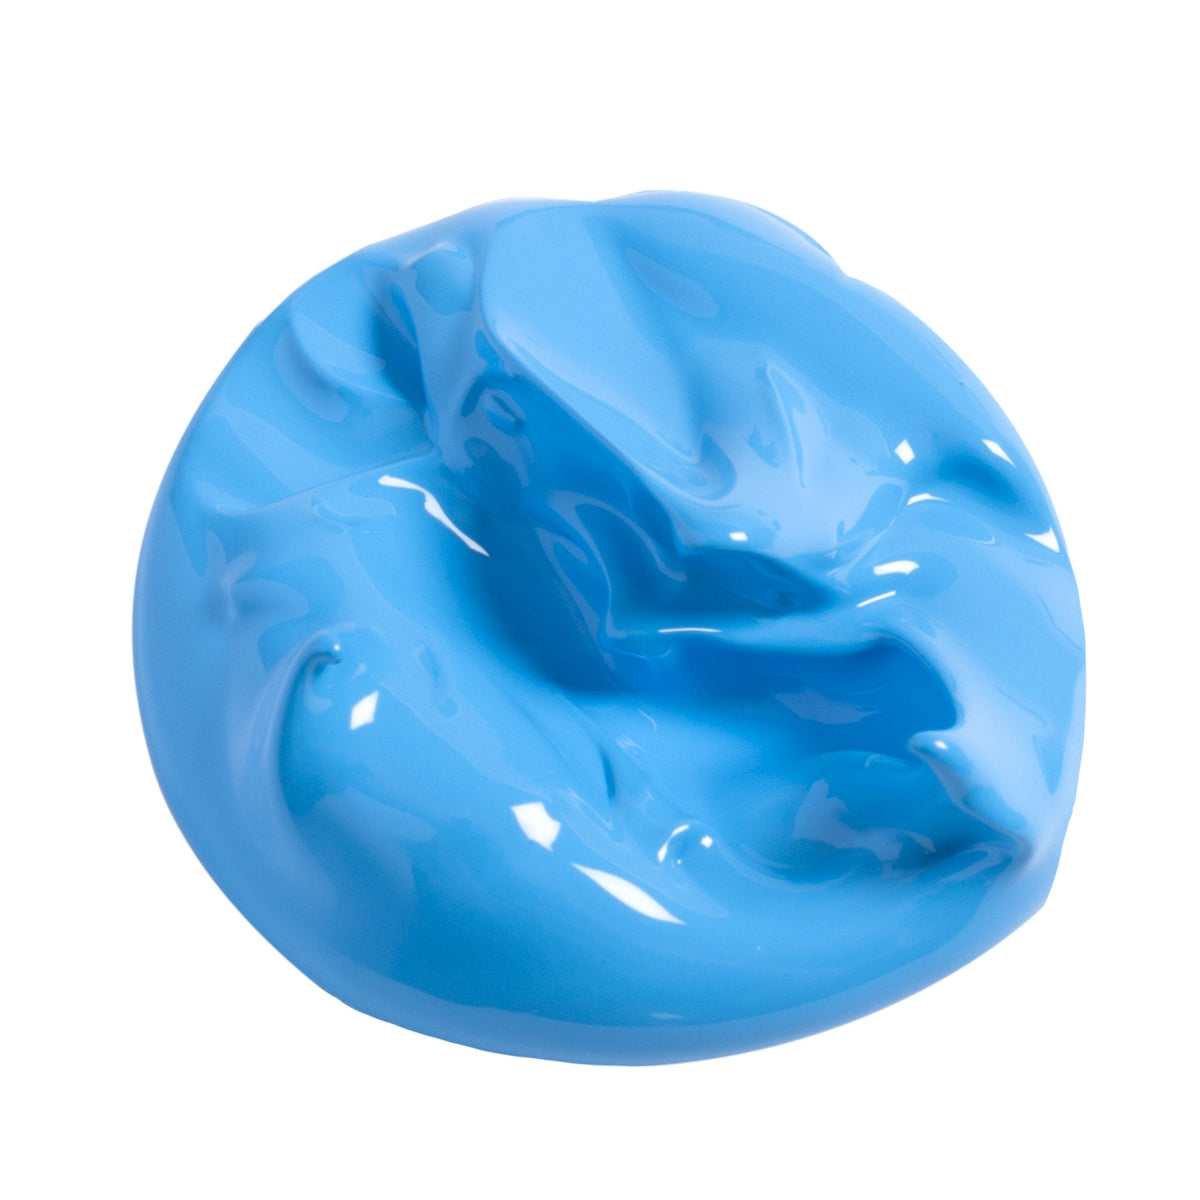 Elements 500ml Acrylic Cerulean Blue Hue